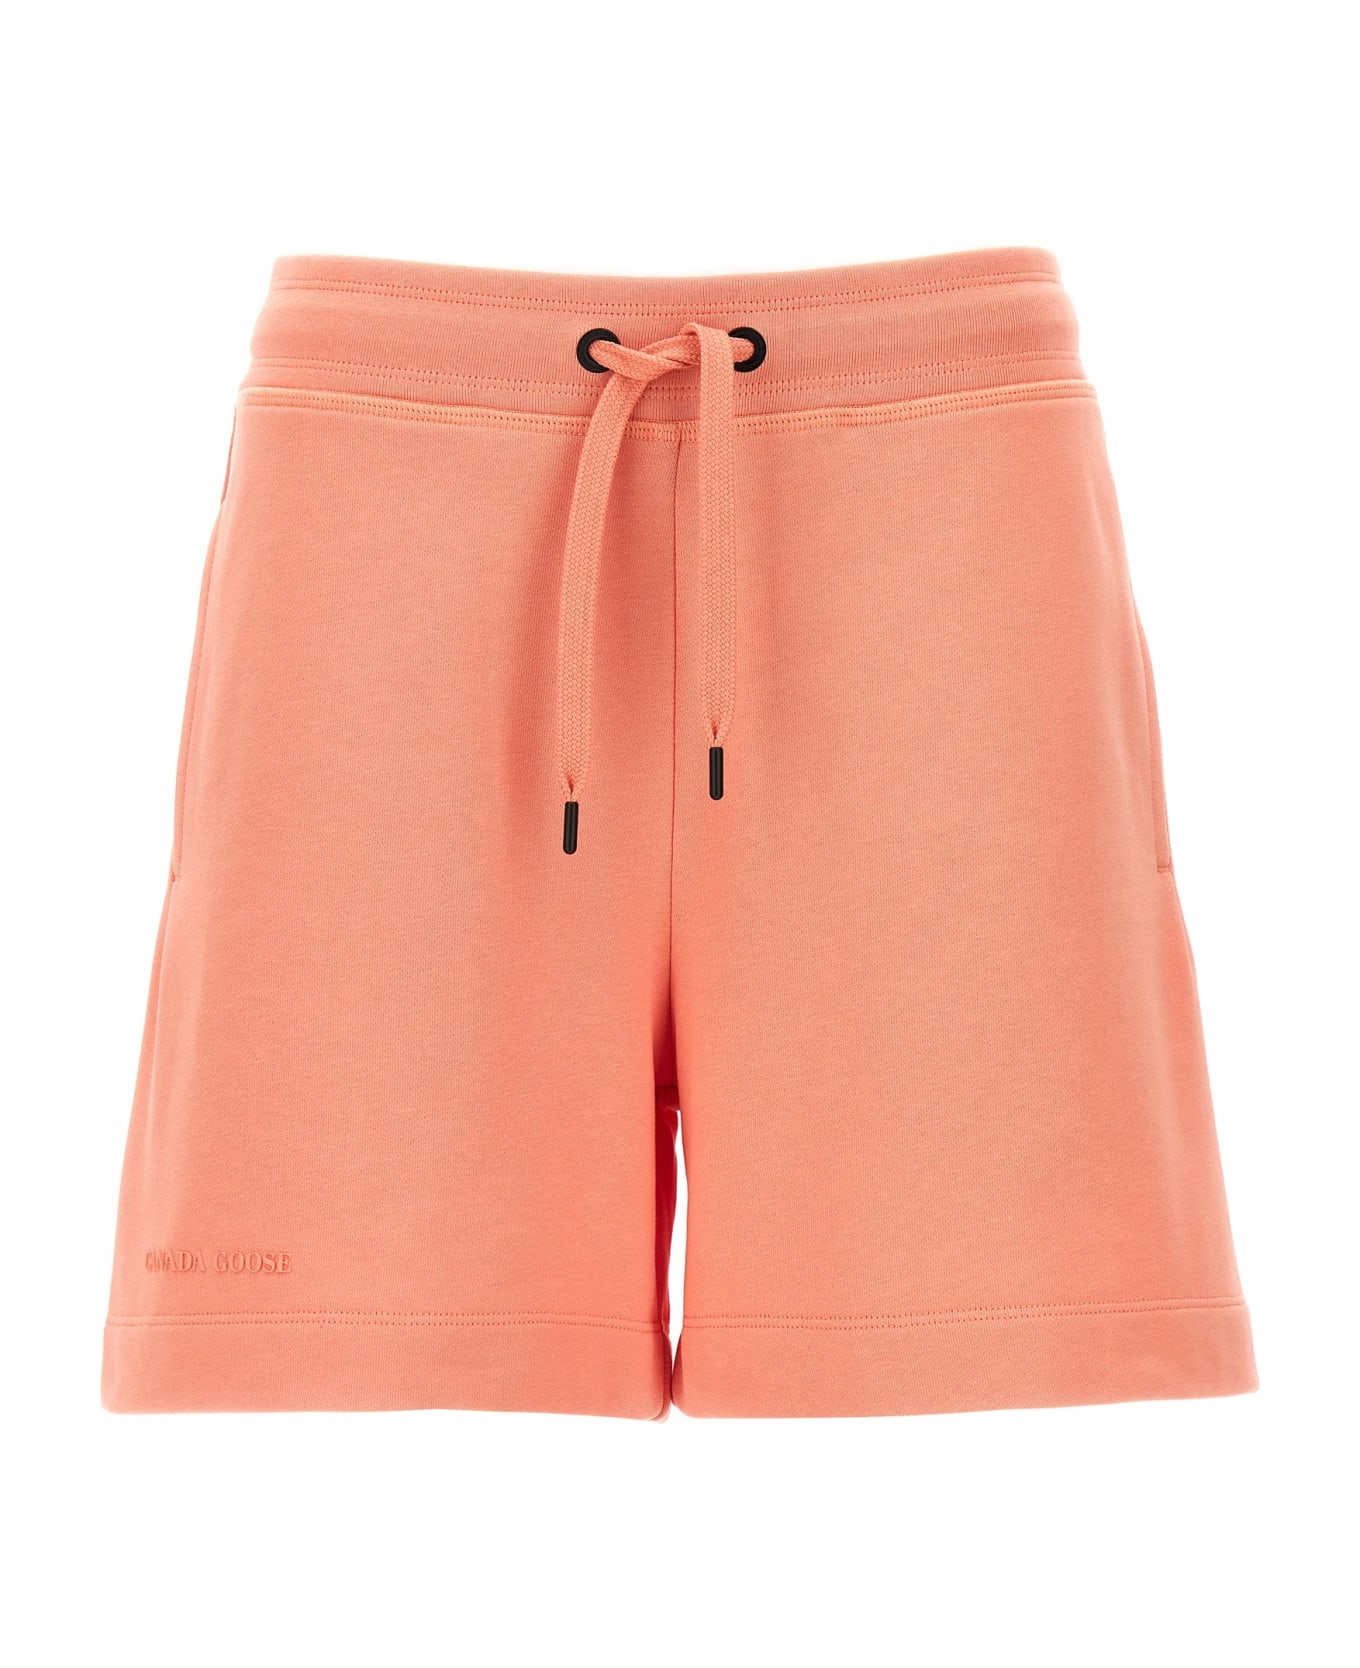 Canada Goose 'muskoka' Bermuda Shorts - Pink ショートパンツ